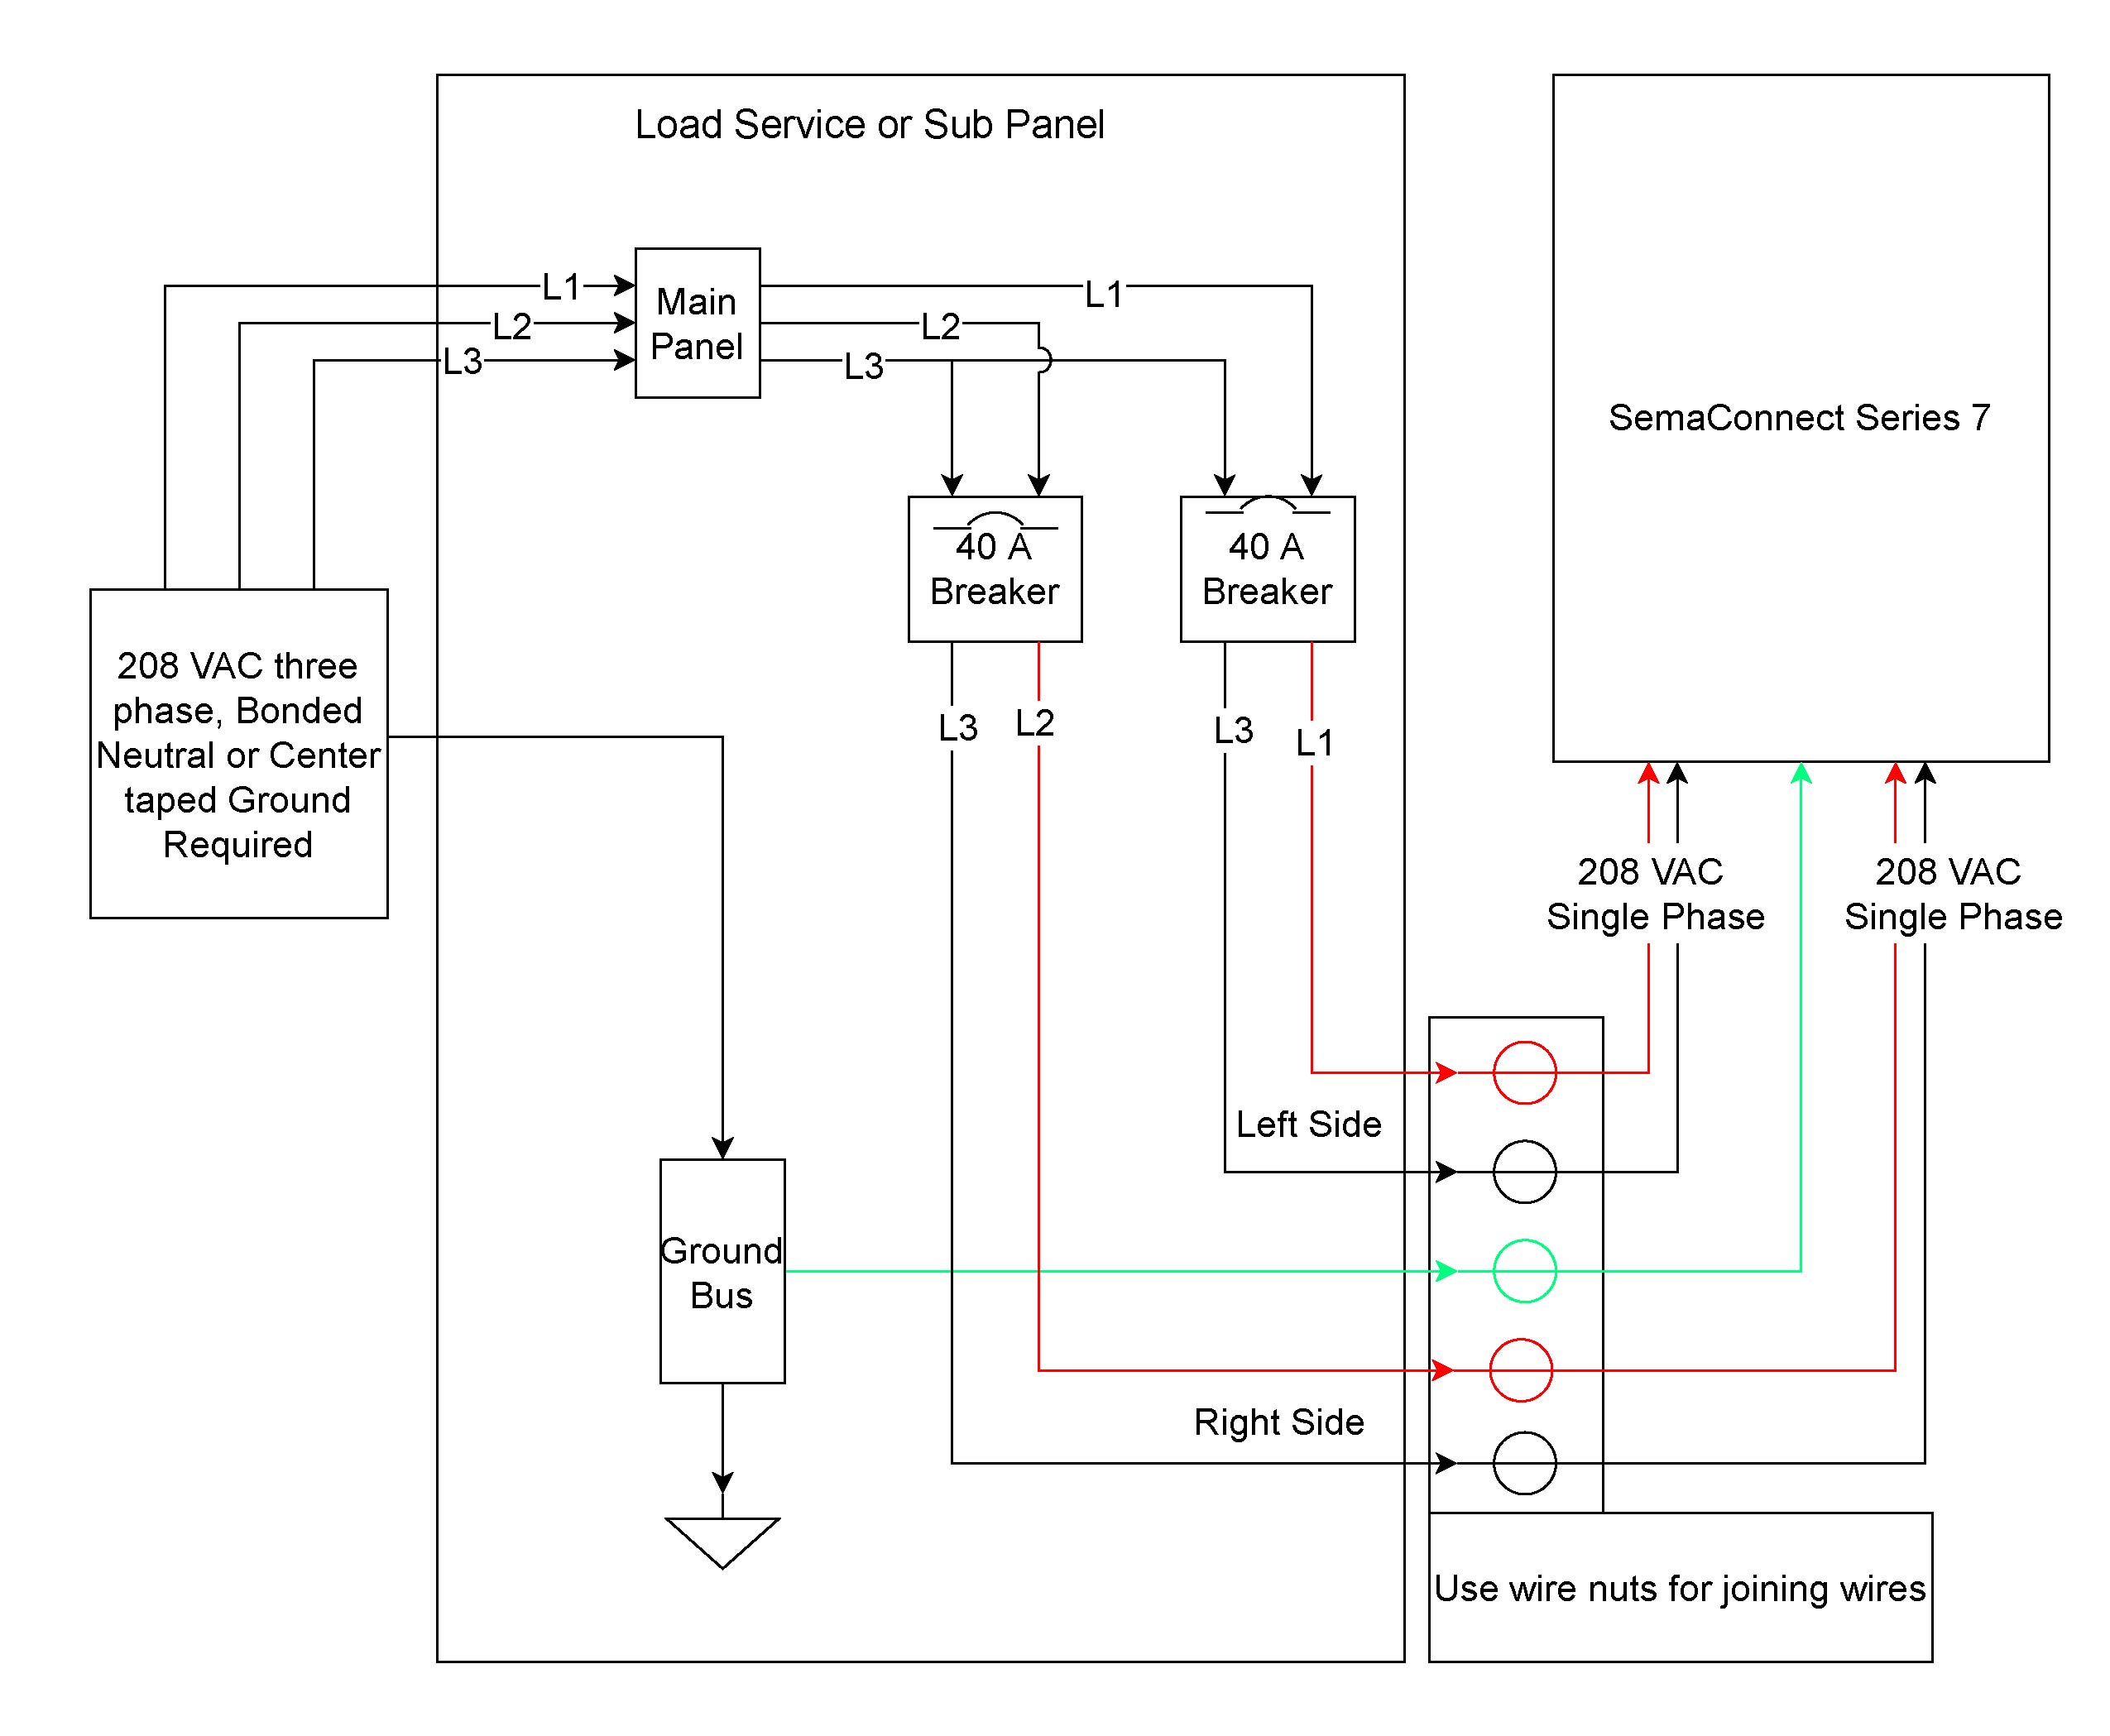 deh p3100ub wiring diagram